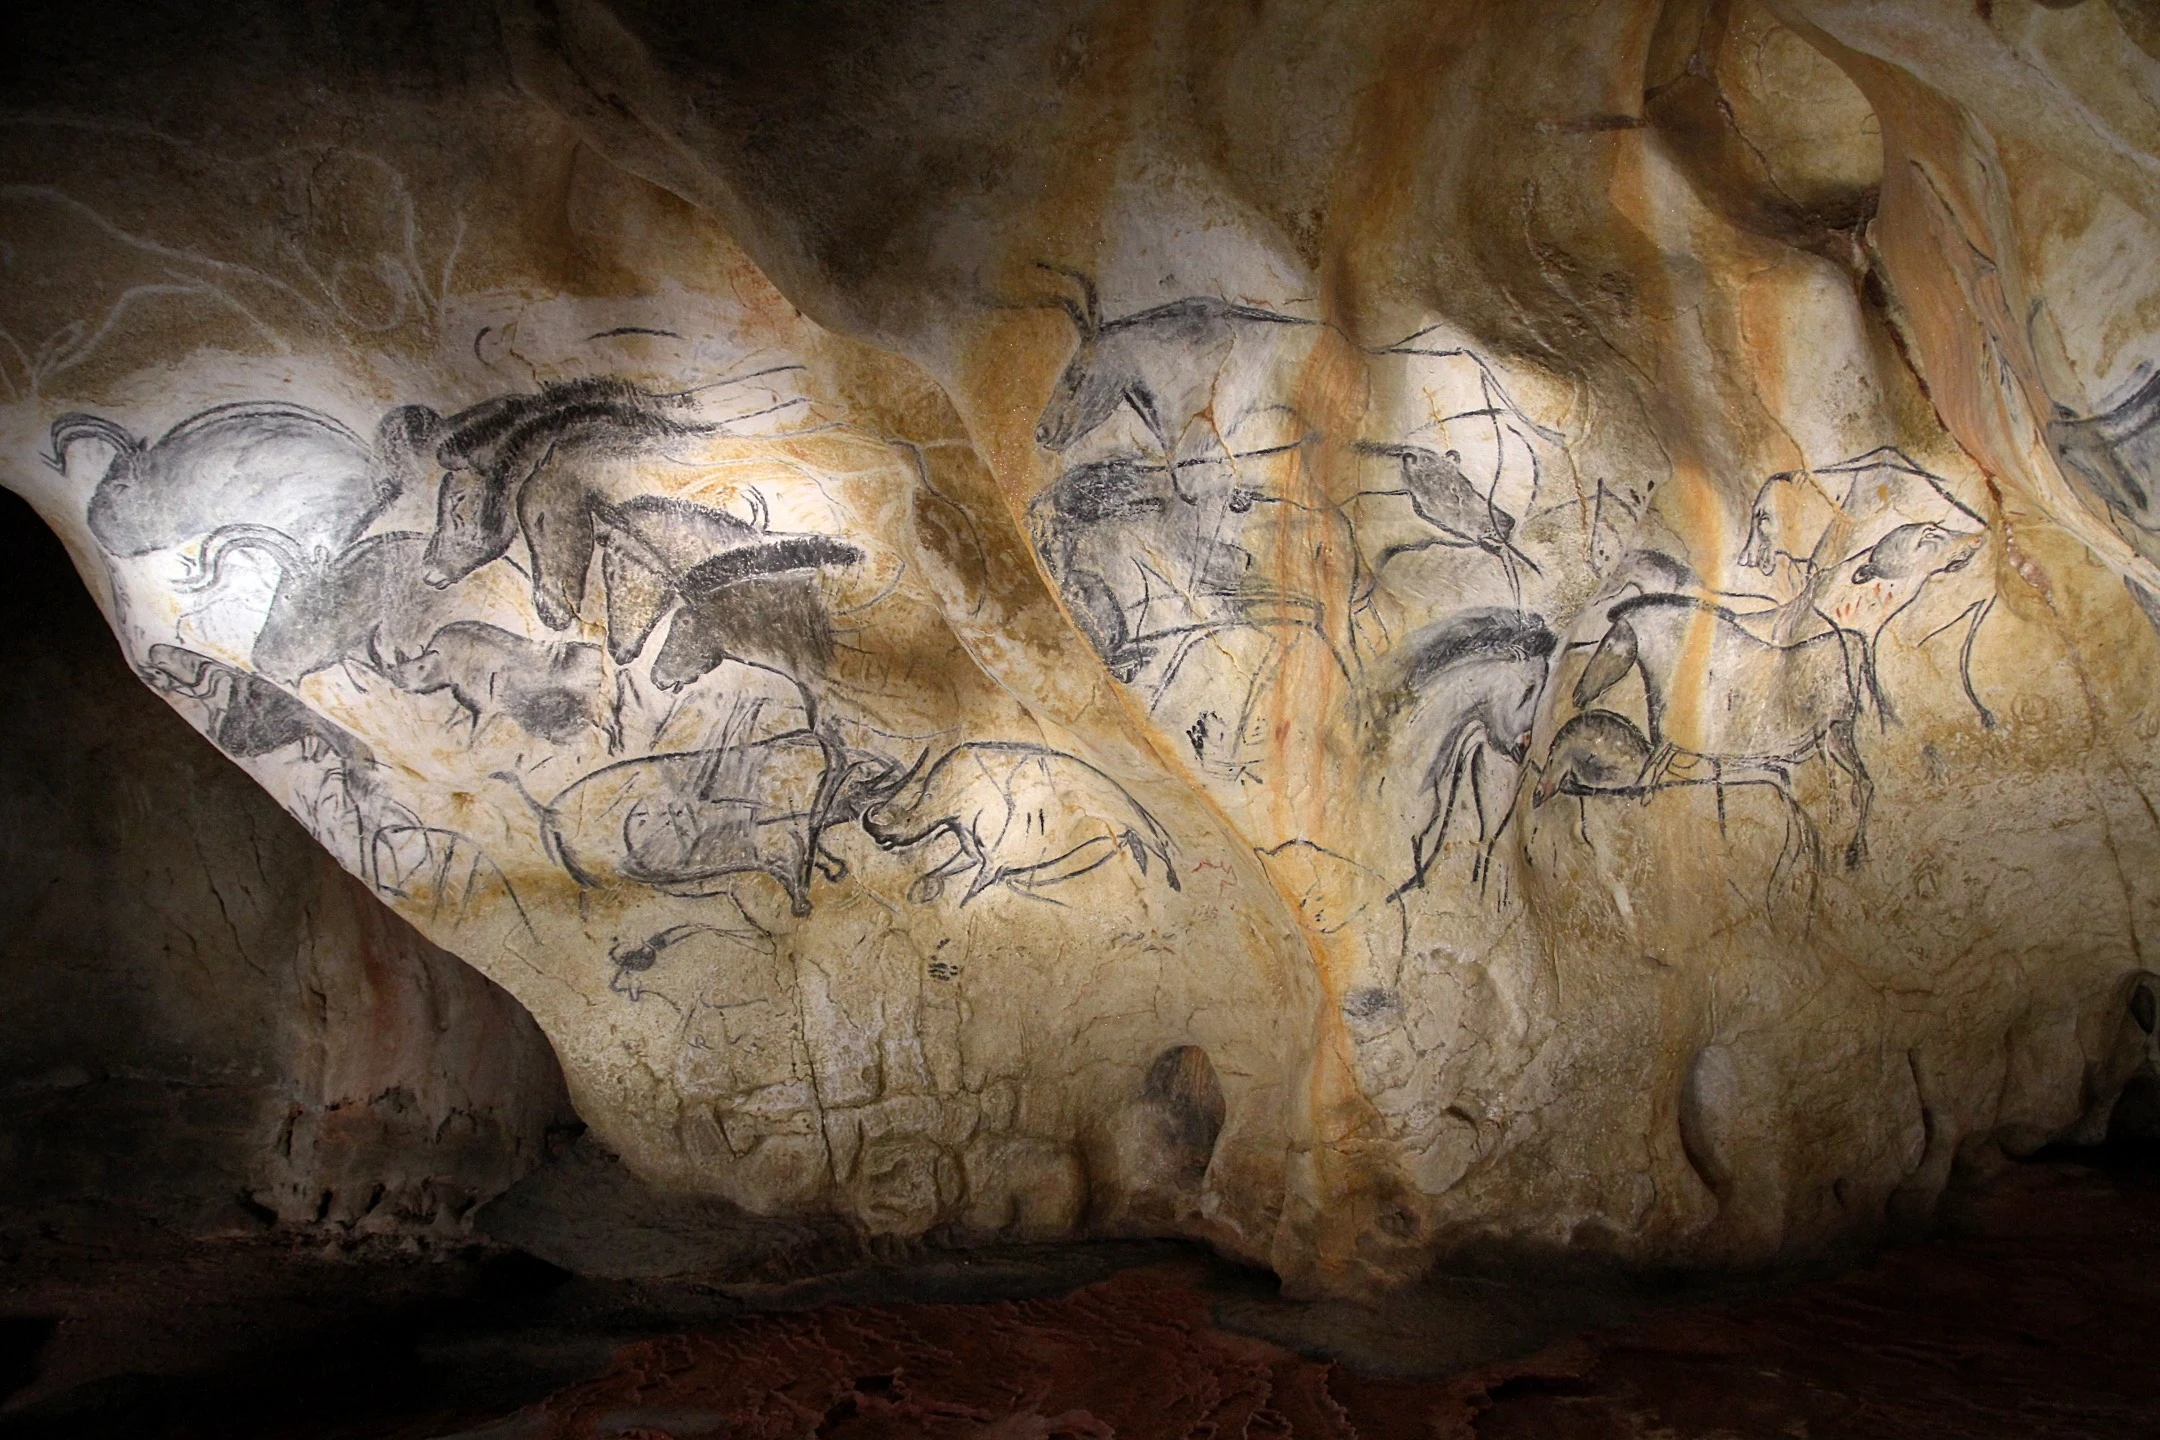 The Chauvet Cave paintings, France (32,000 BCE)